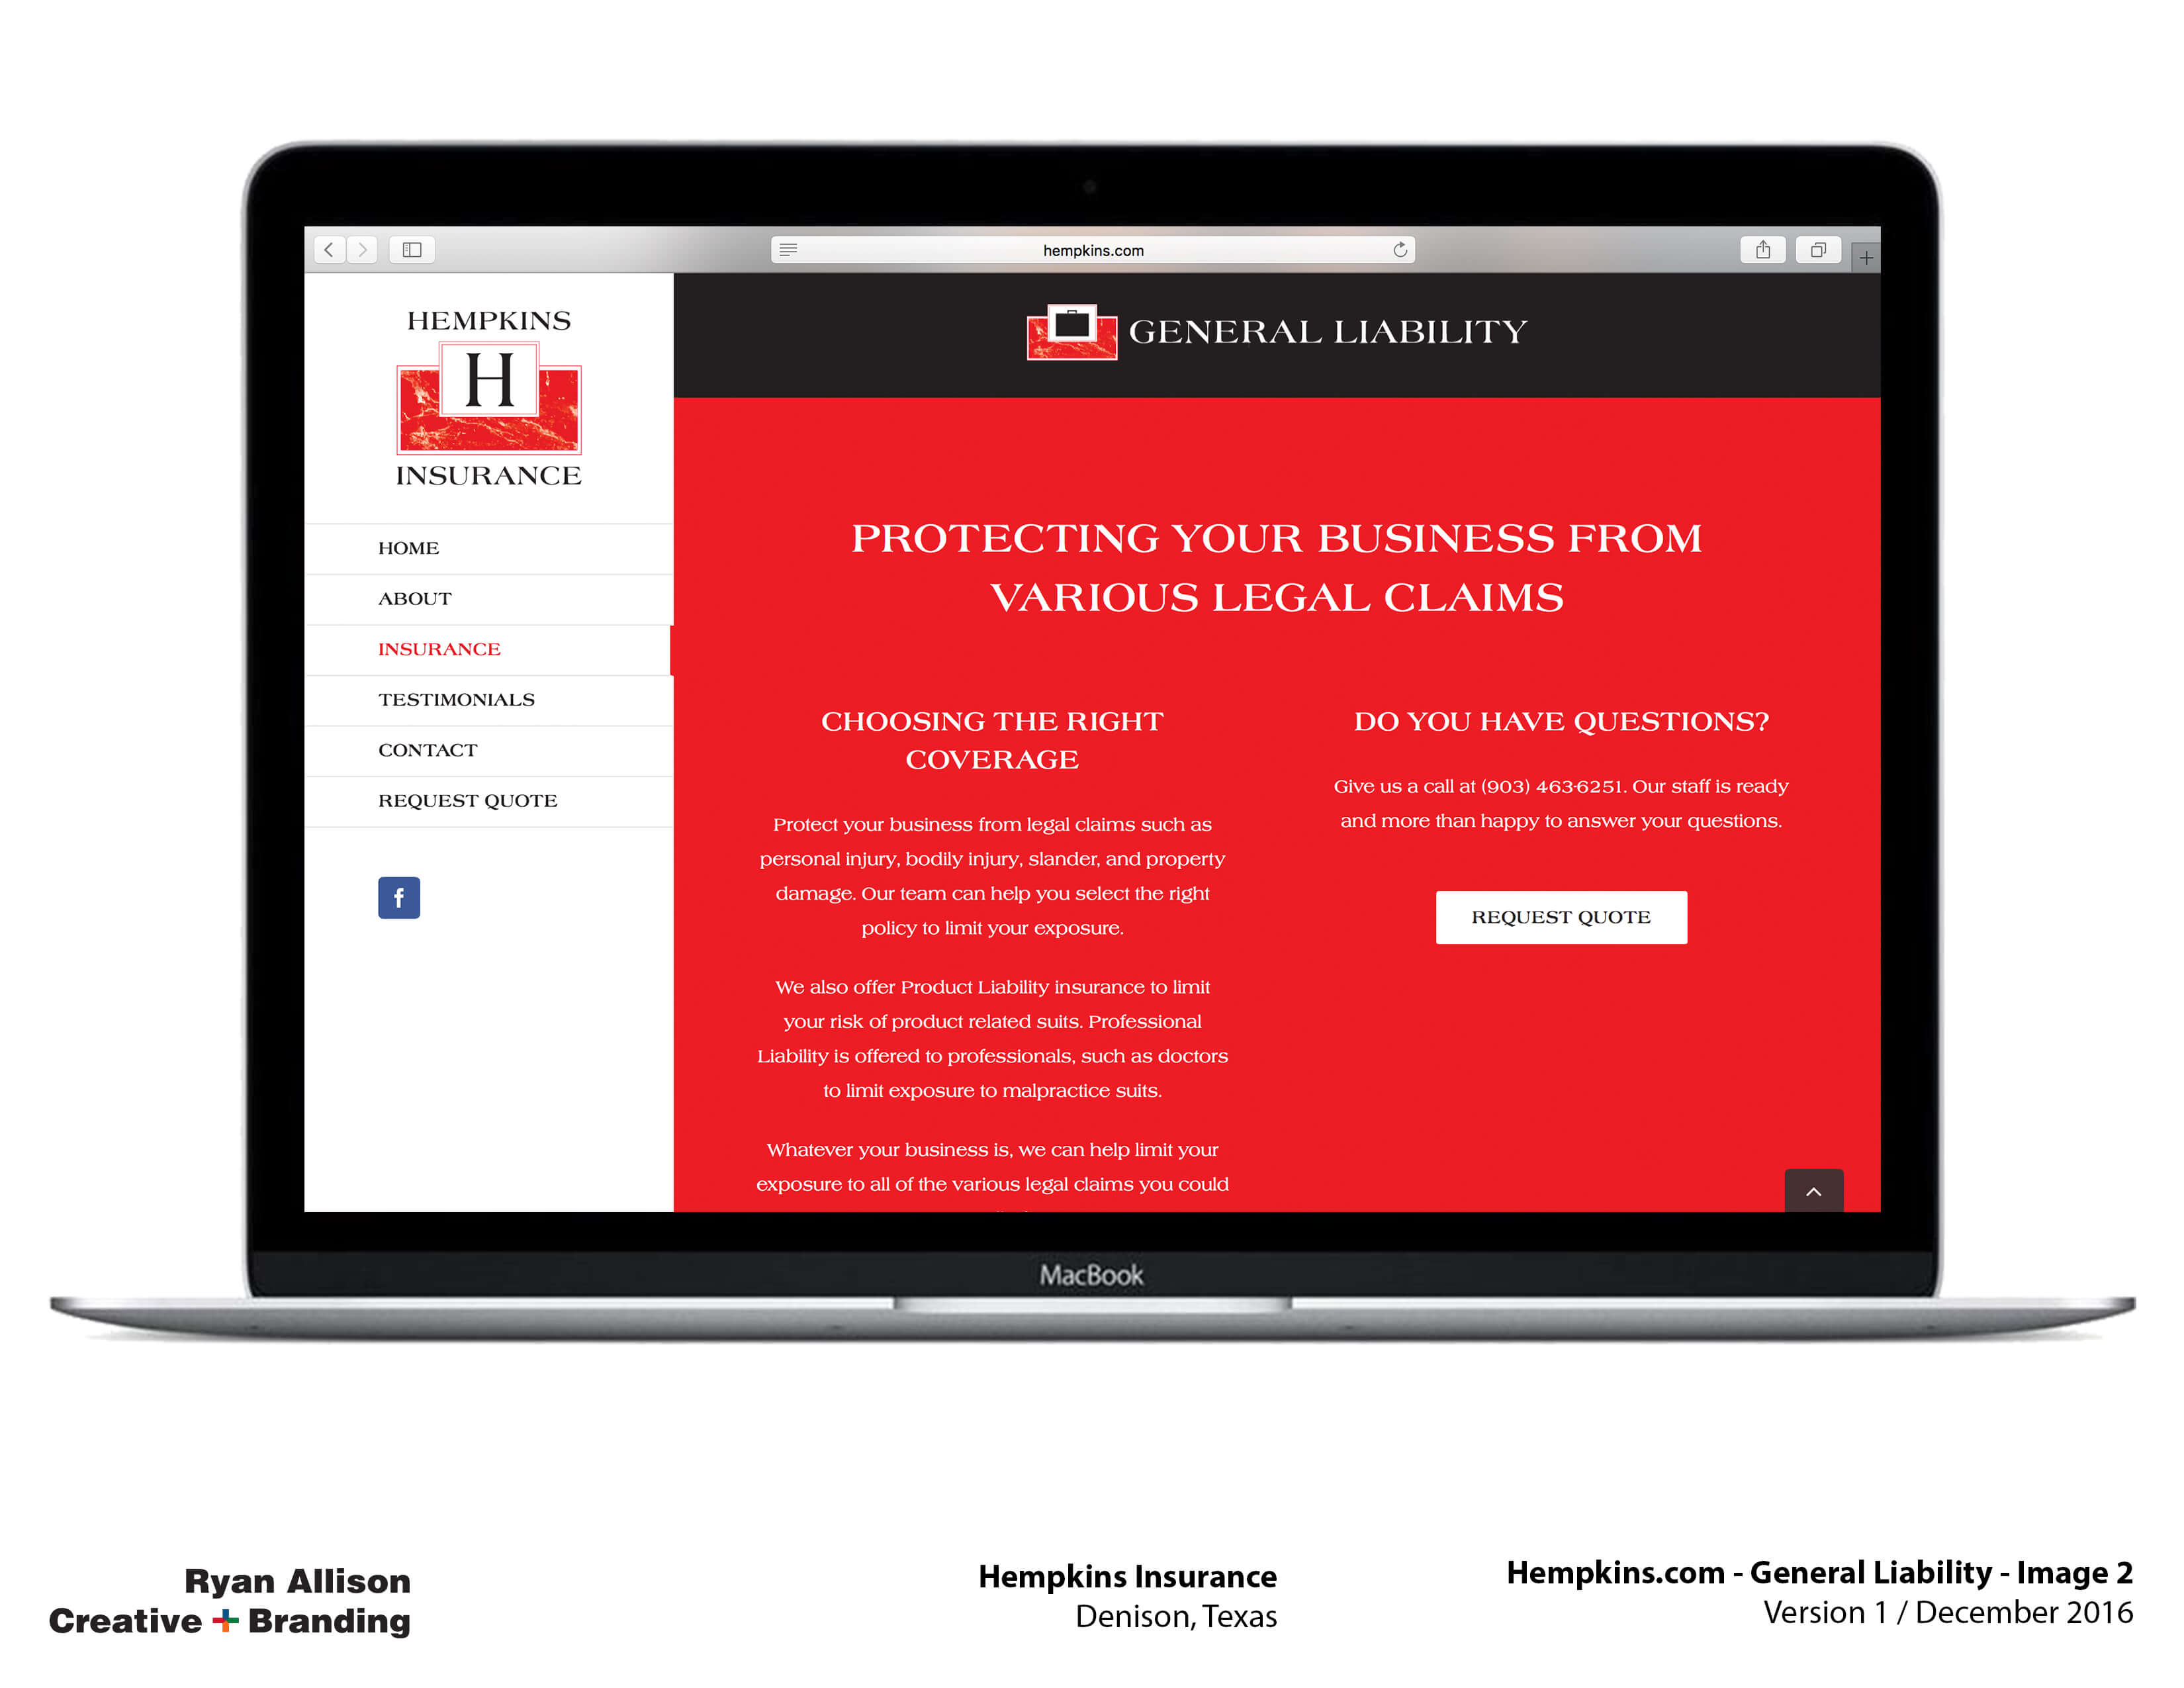 Hempkins Insurance Website General Liability 2 - Project - Ryan Allison Creative + Branding